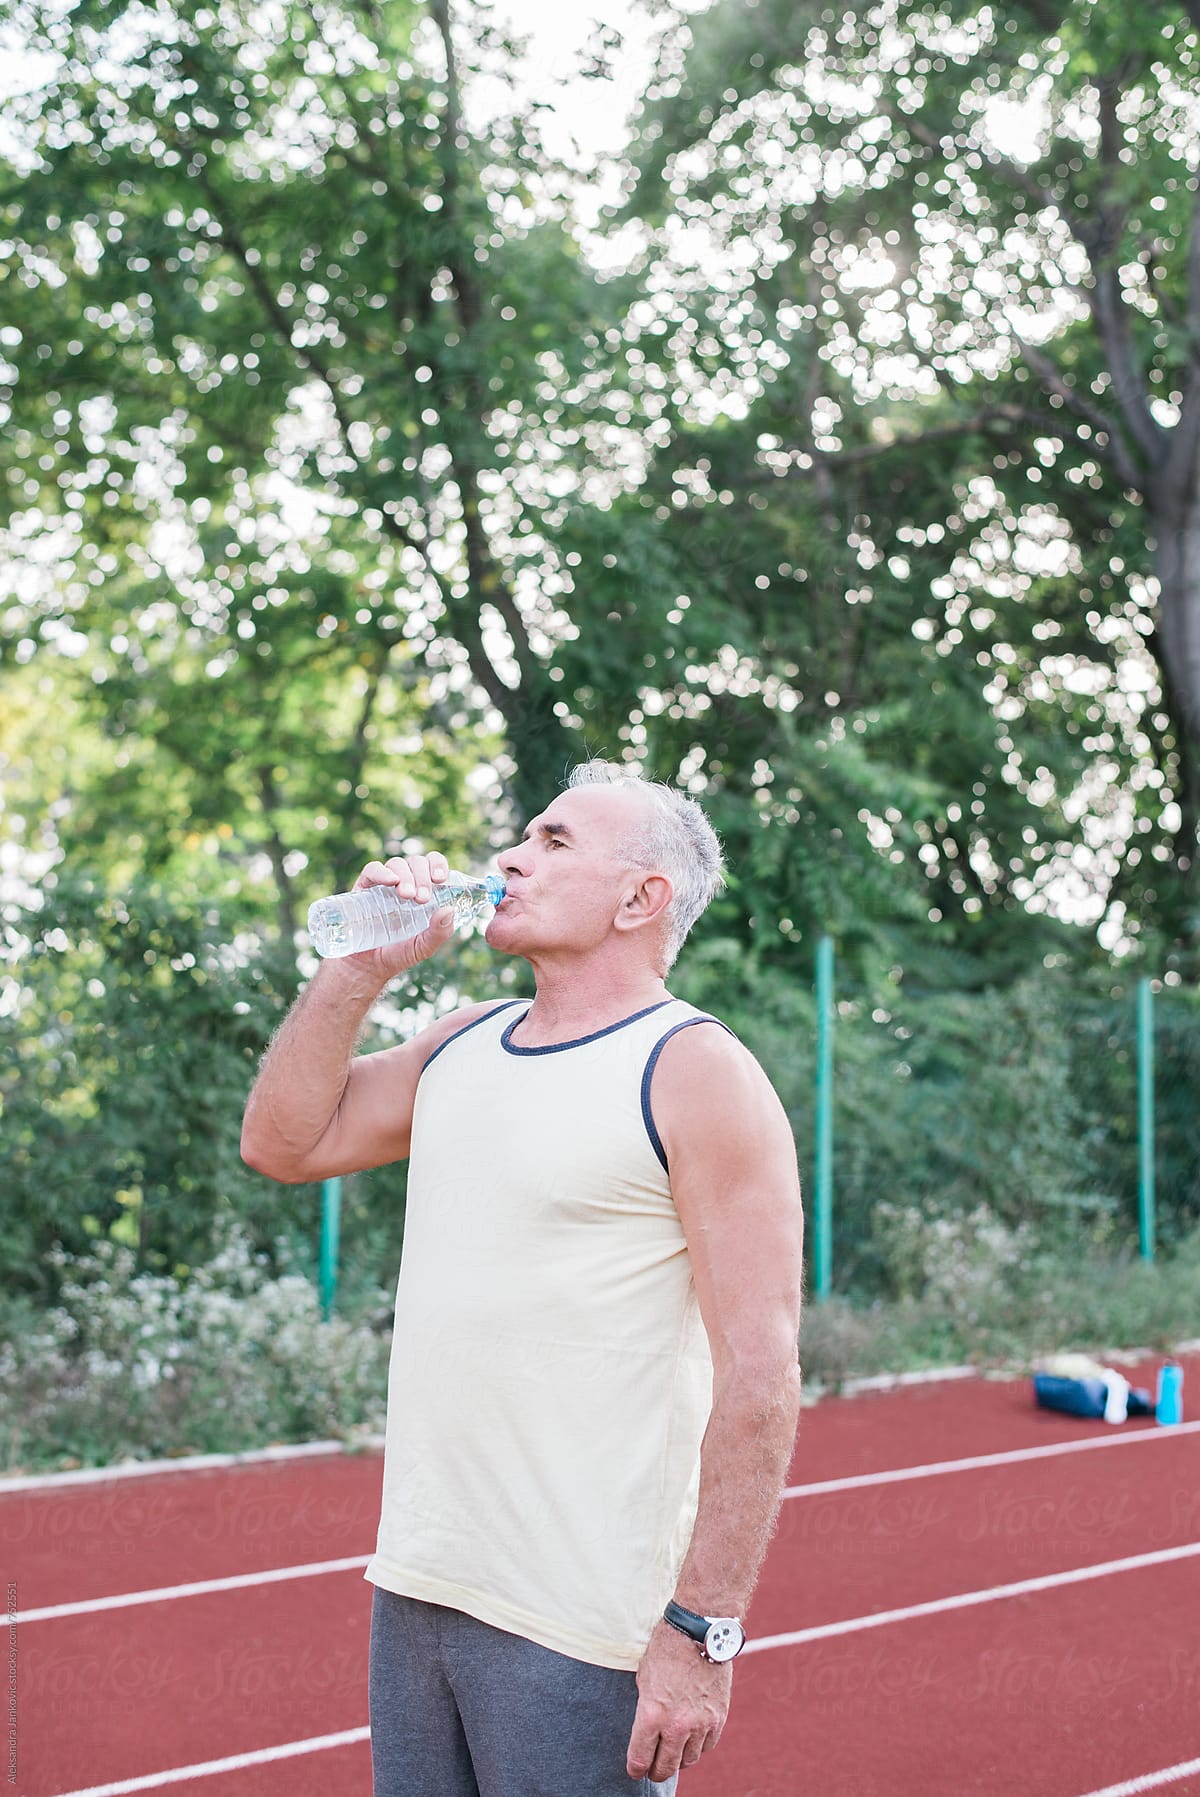 Senior Man Drinking Water After Jogging